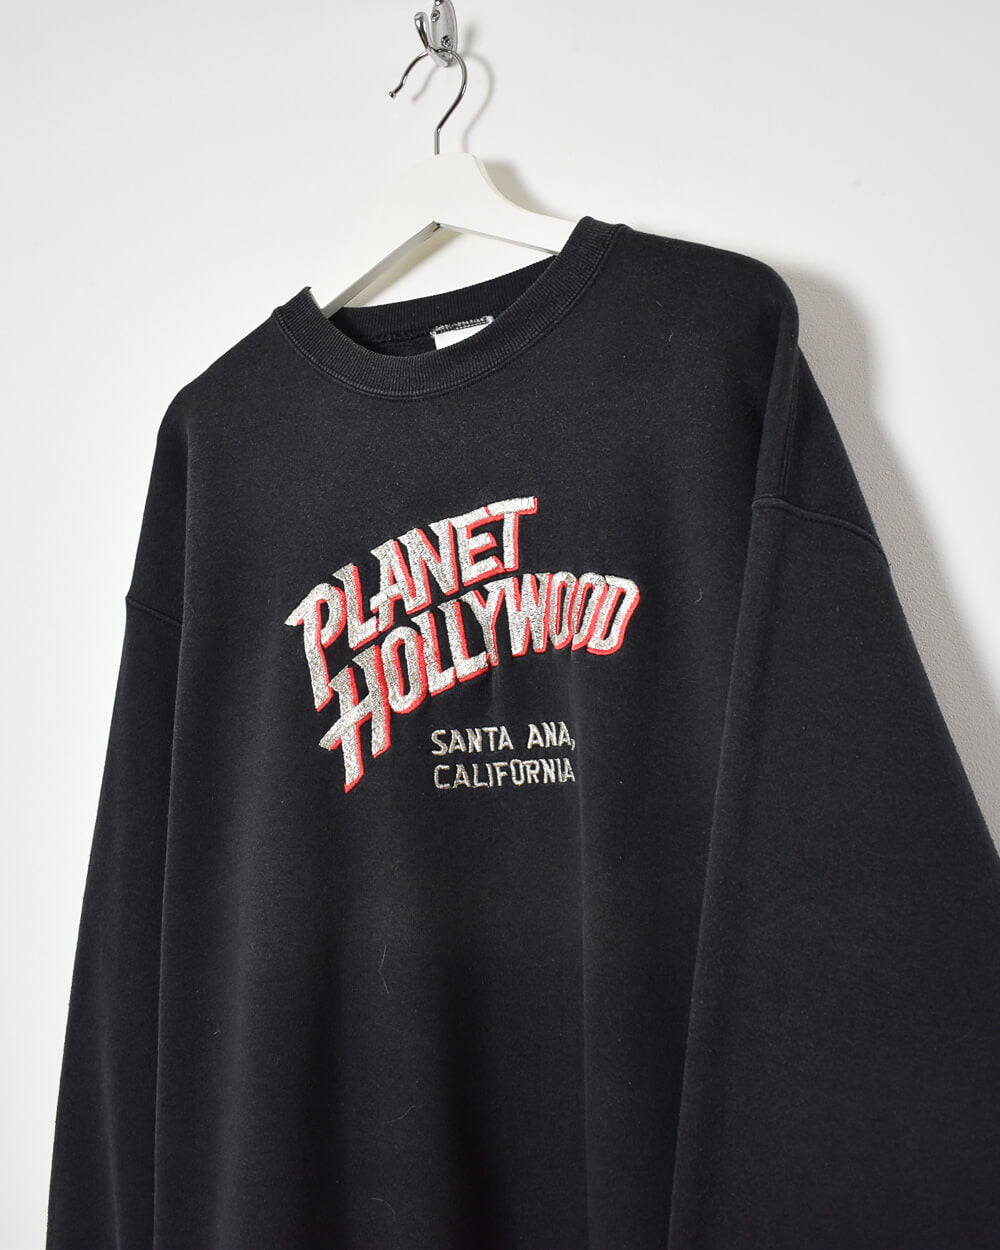 Black Planet Hollywood Santa Ana California Sweatshirt - X-Large